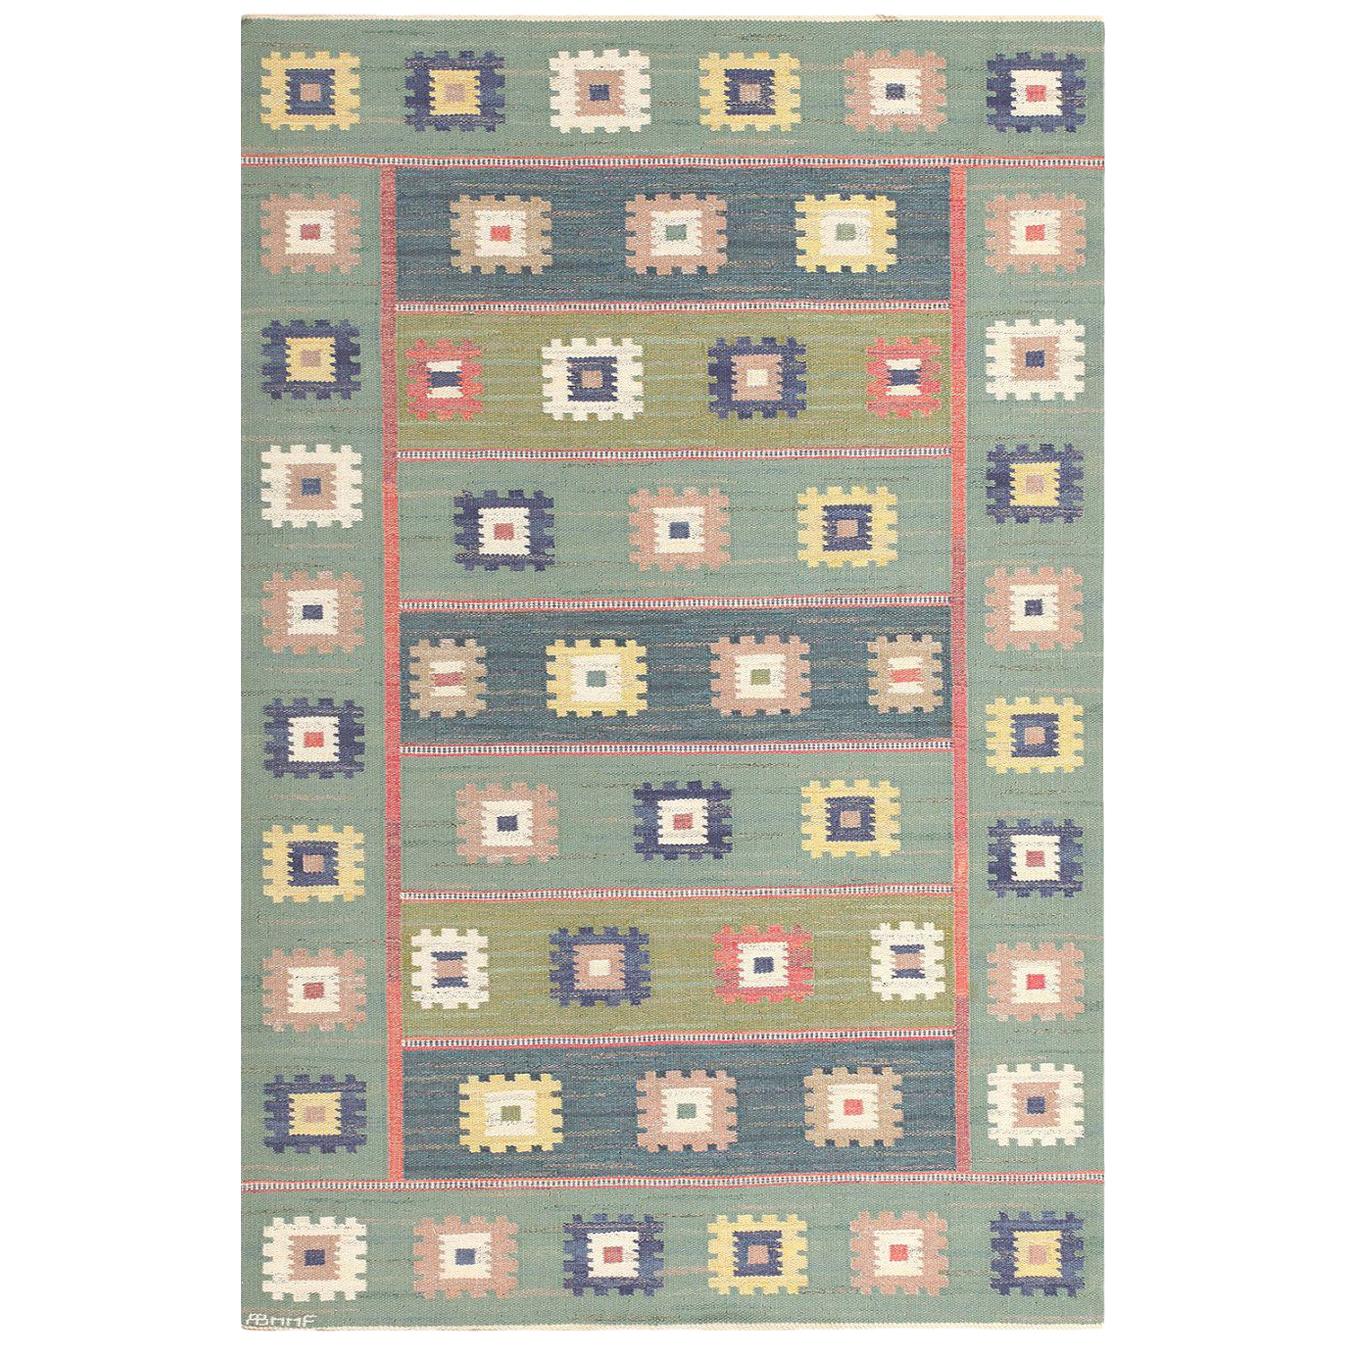 Vintage Swedish Carpet by Marta Maas-Fjetterström. Size: 5 ft 7 in x 8 ft 4 in